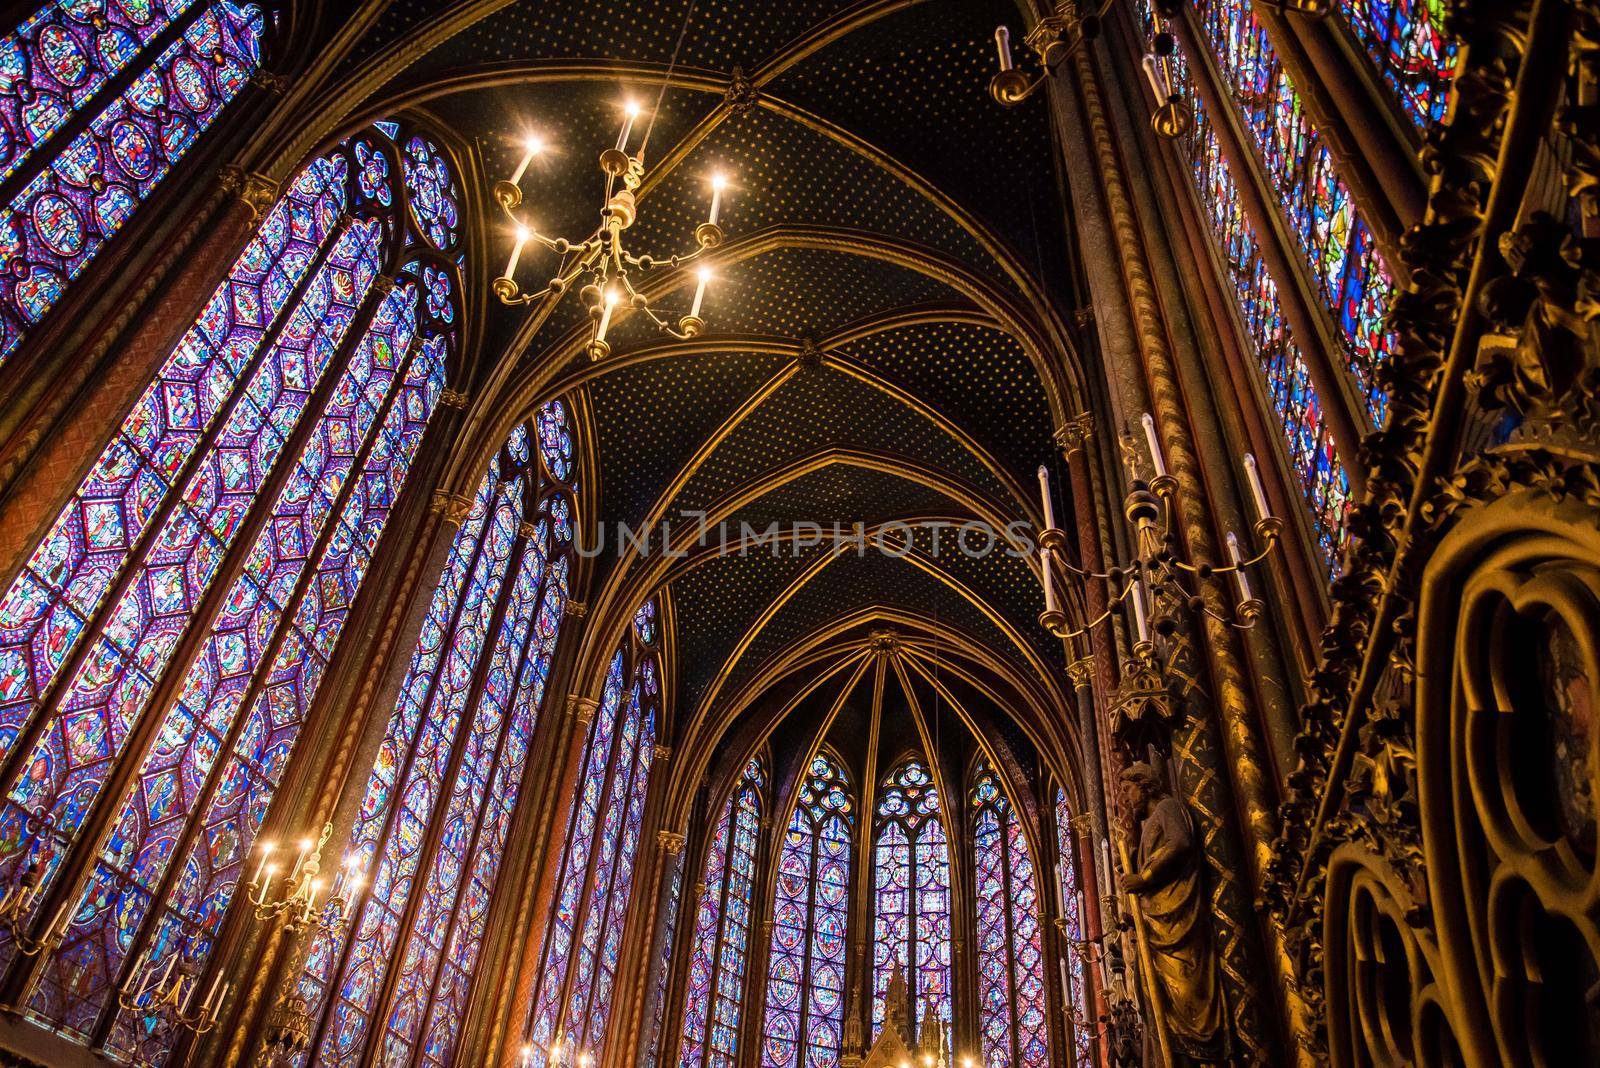 Saint Chappelle, Paris, France, Catholic Church by jyurinko